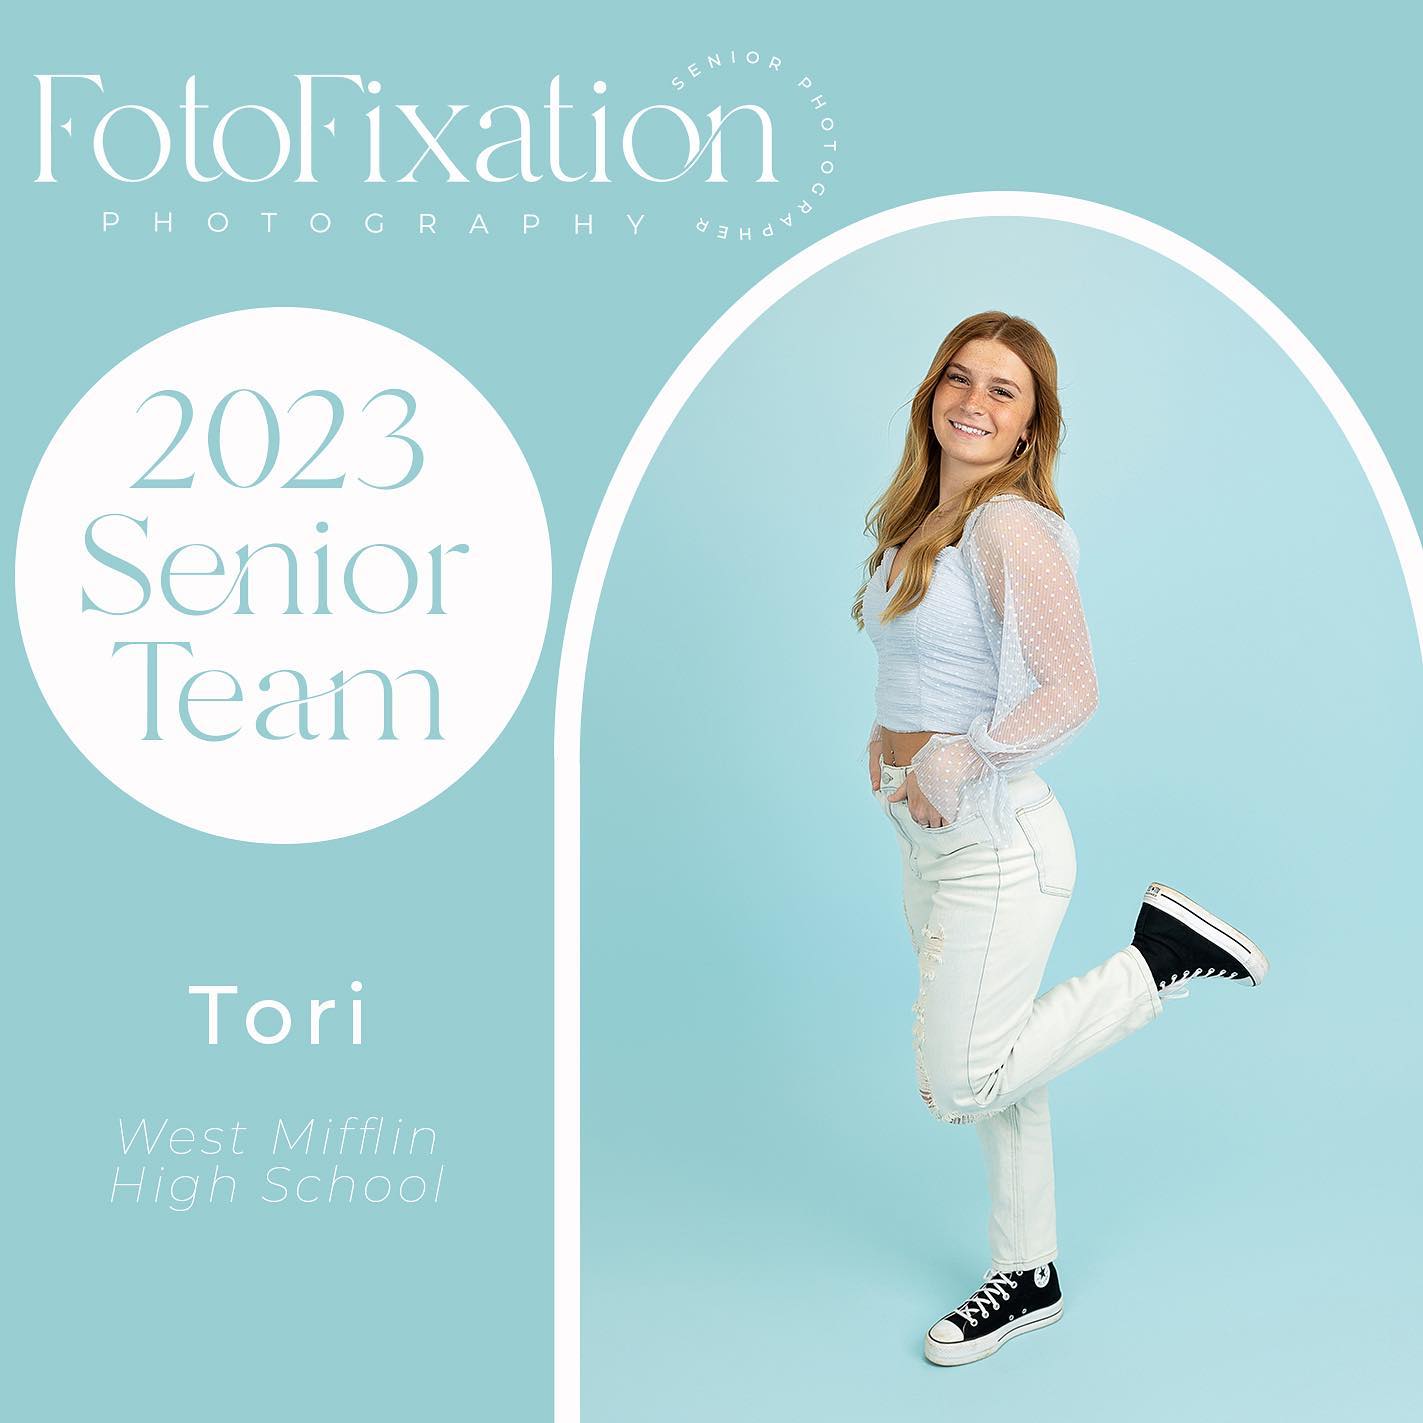 Fotofixation Photography - 2023 Senior Team - Tori - West Mifflin High School-2